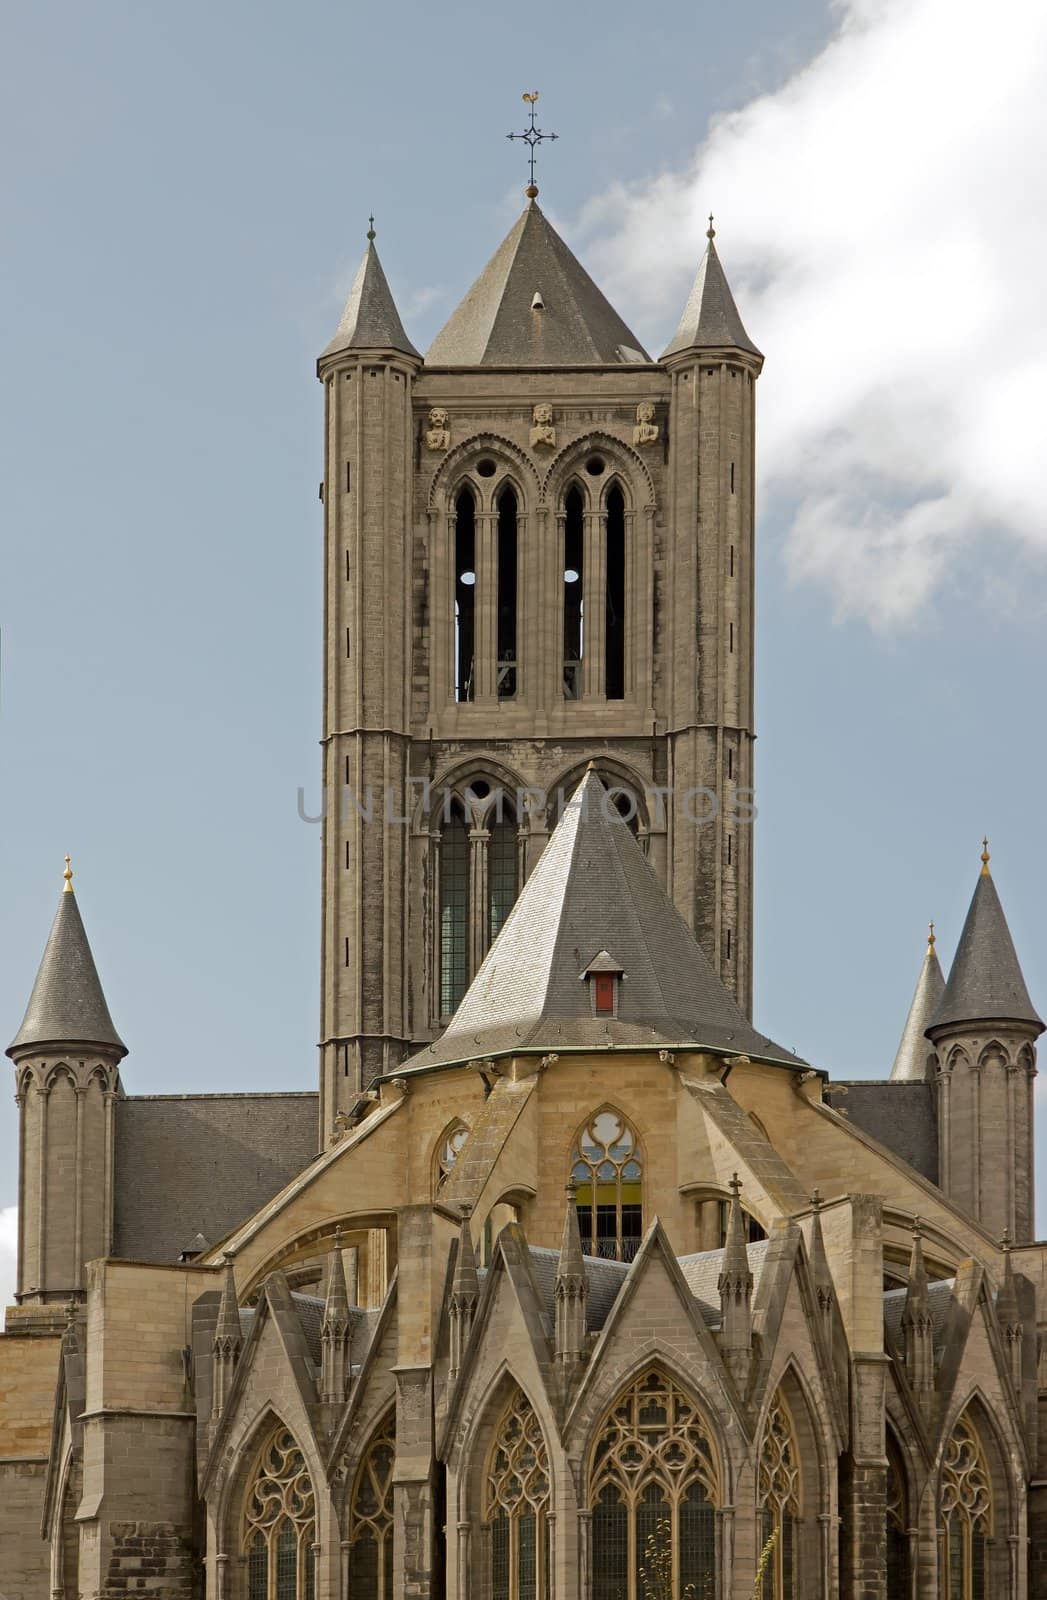 St Nicolas church Gent by neko92vl